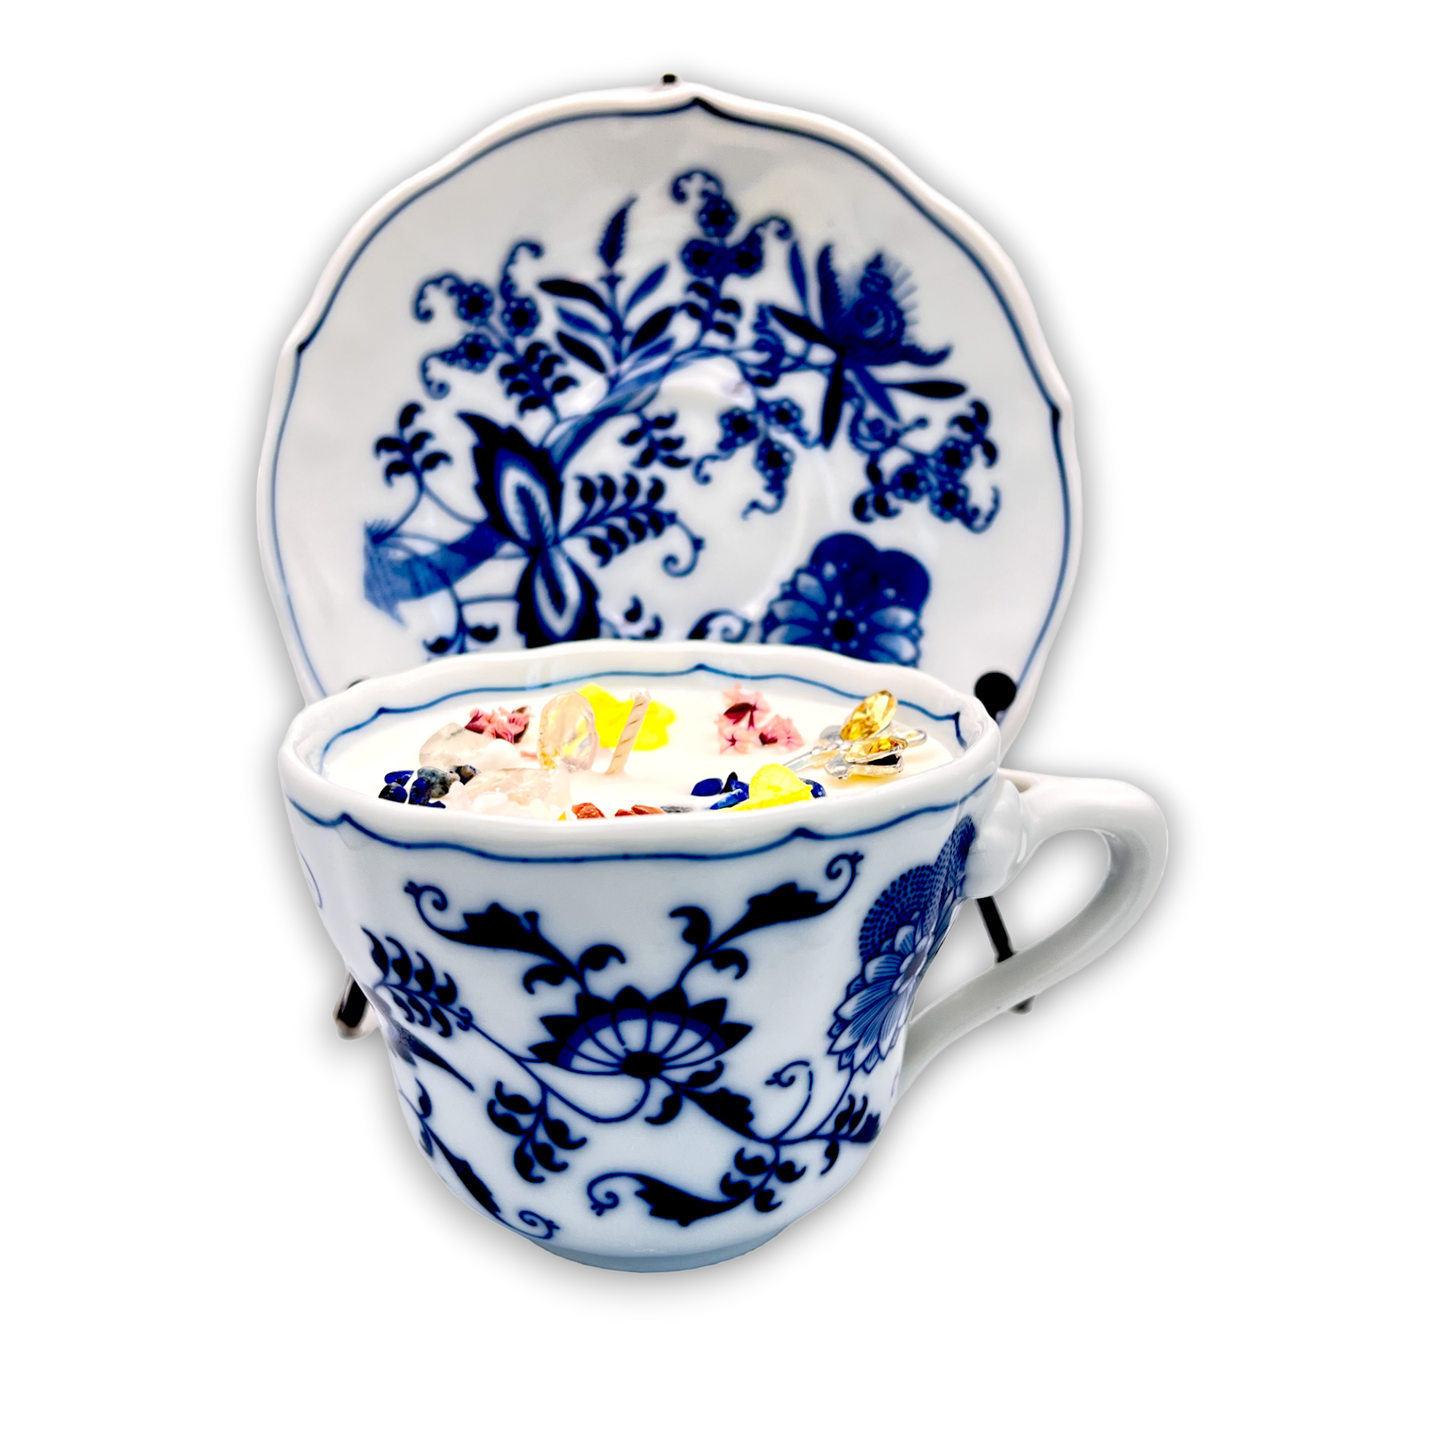 Japanese Blue Danube Vintage Teacup Candle